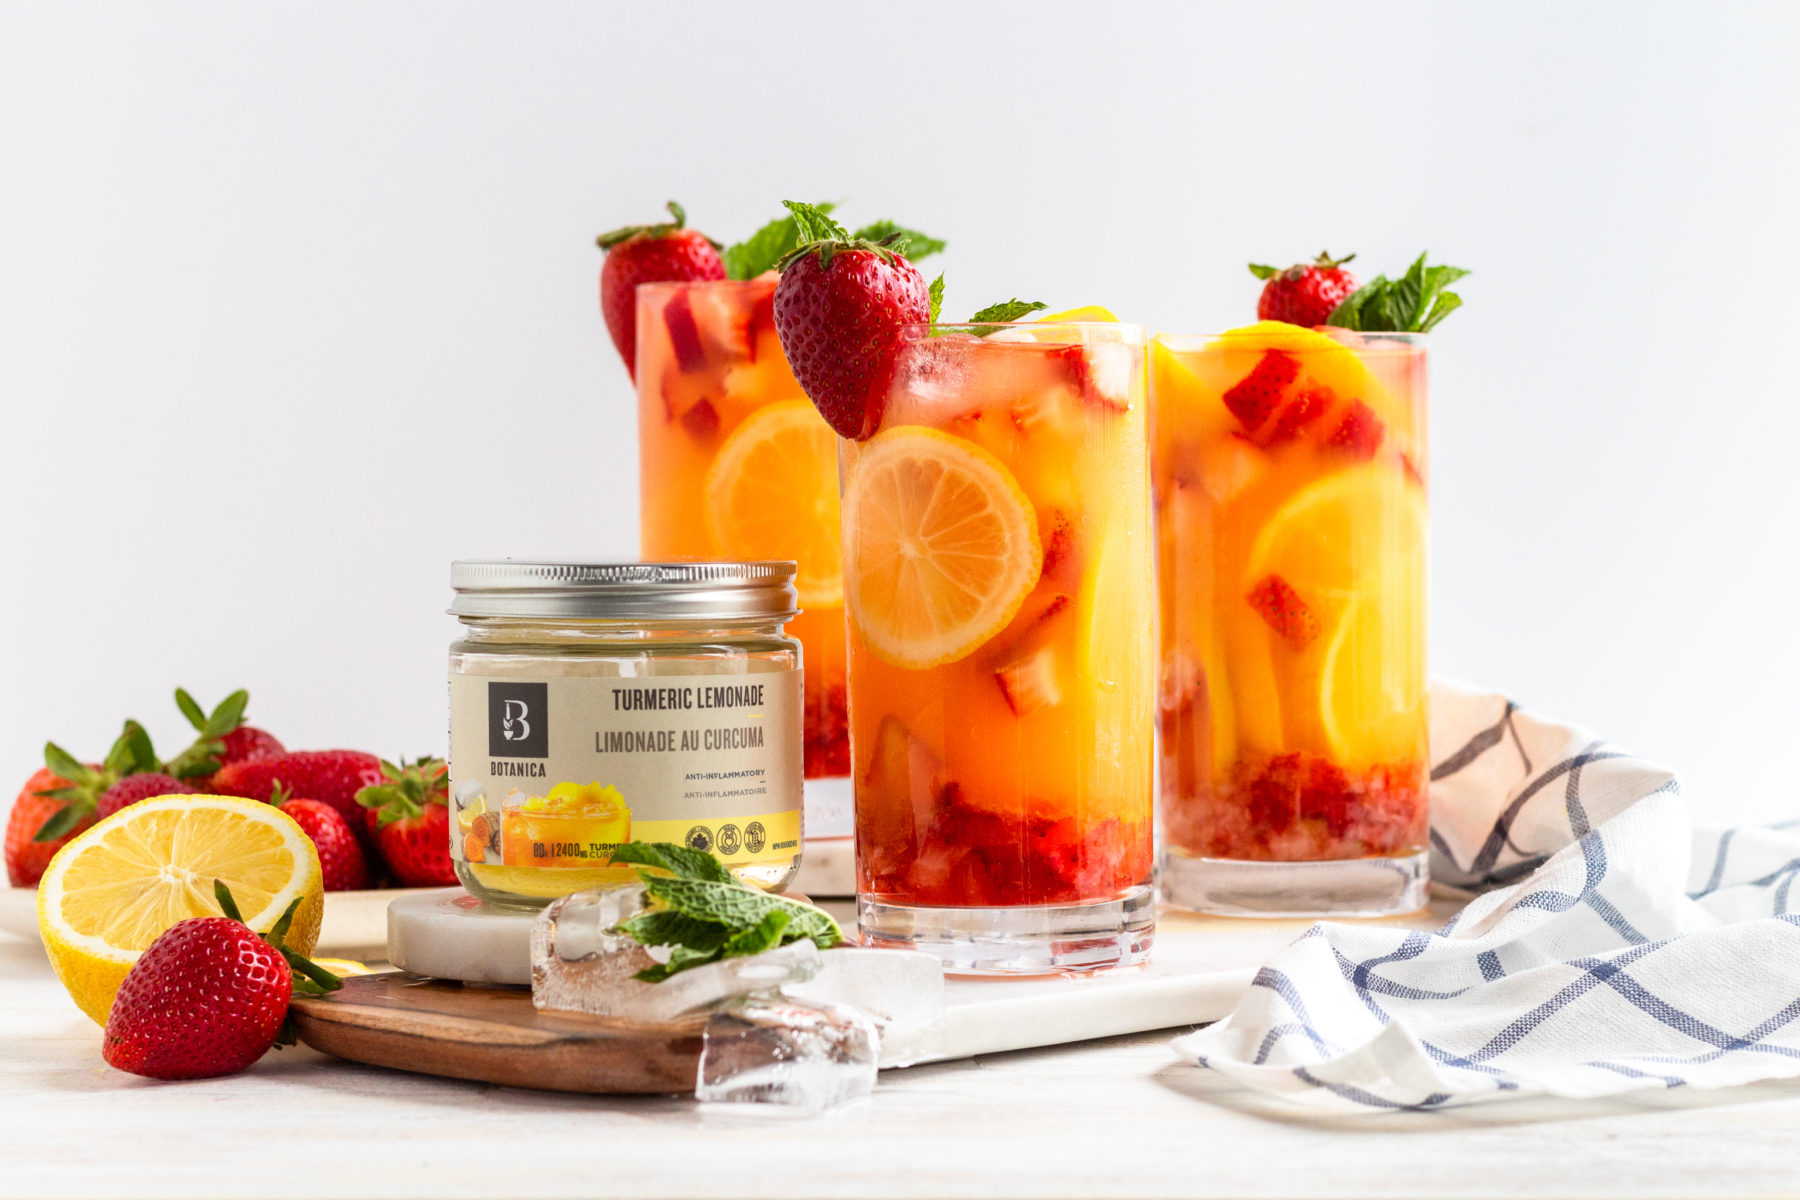 Strawberry lemonade spritz made with Botanica sweetened turmeric lemonade. refreshing summer drink. vegan, gluten-free,